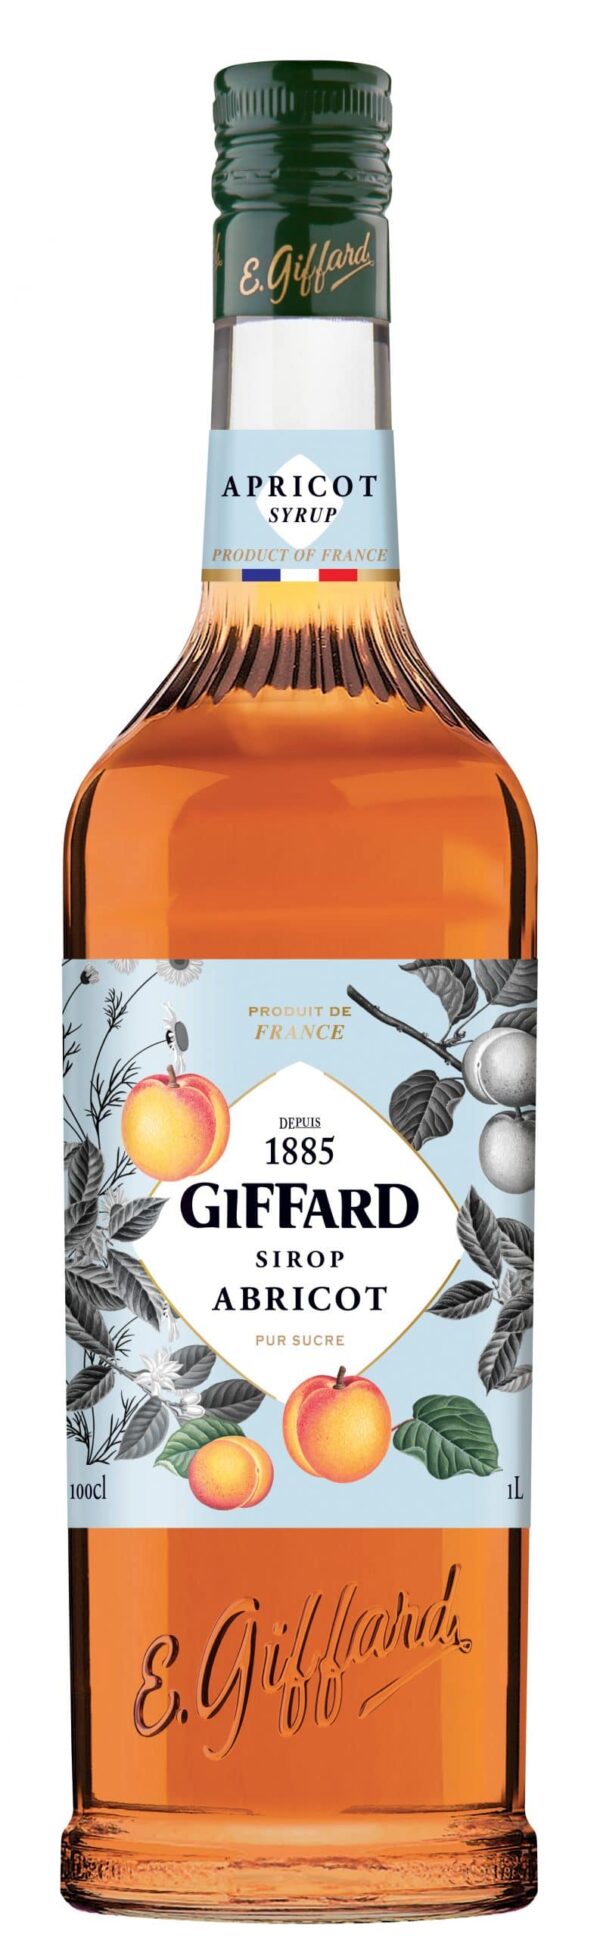 Giffard Apricot Syrup, Flaske